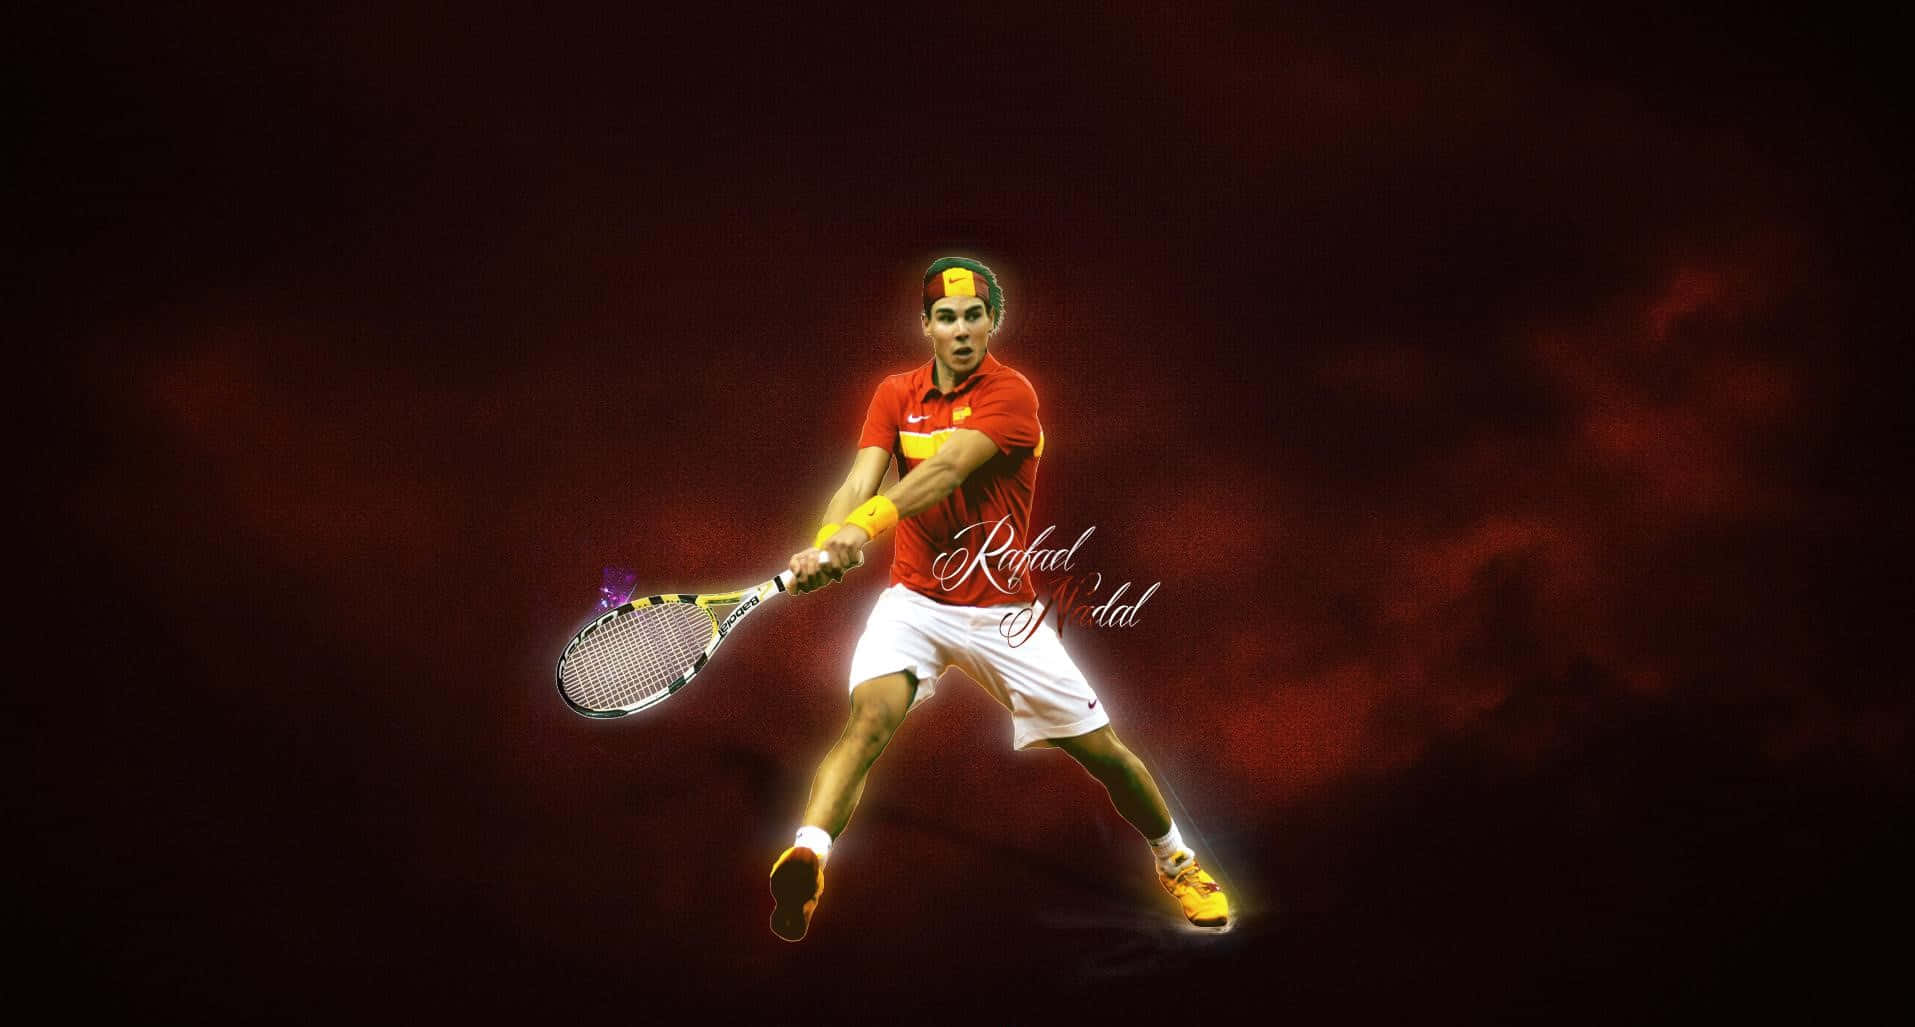 sHD spanske tennis spiller Rafael Nadal baggrunde